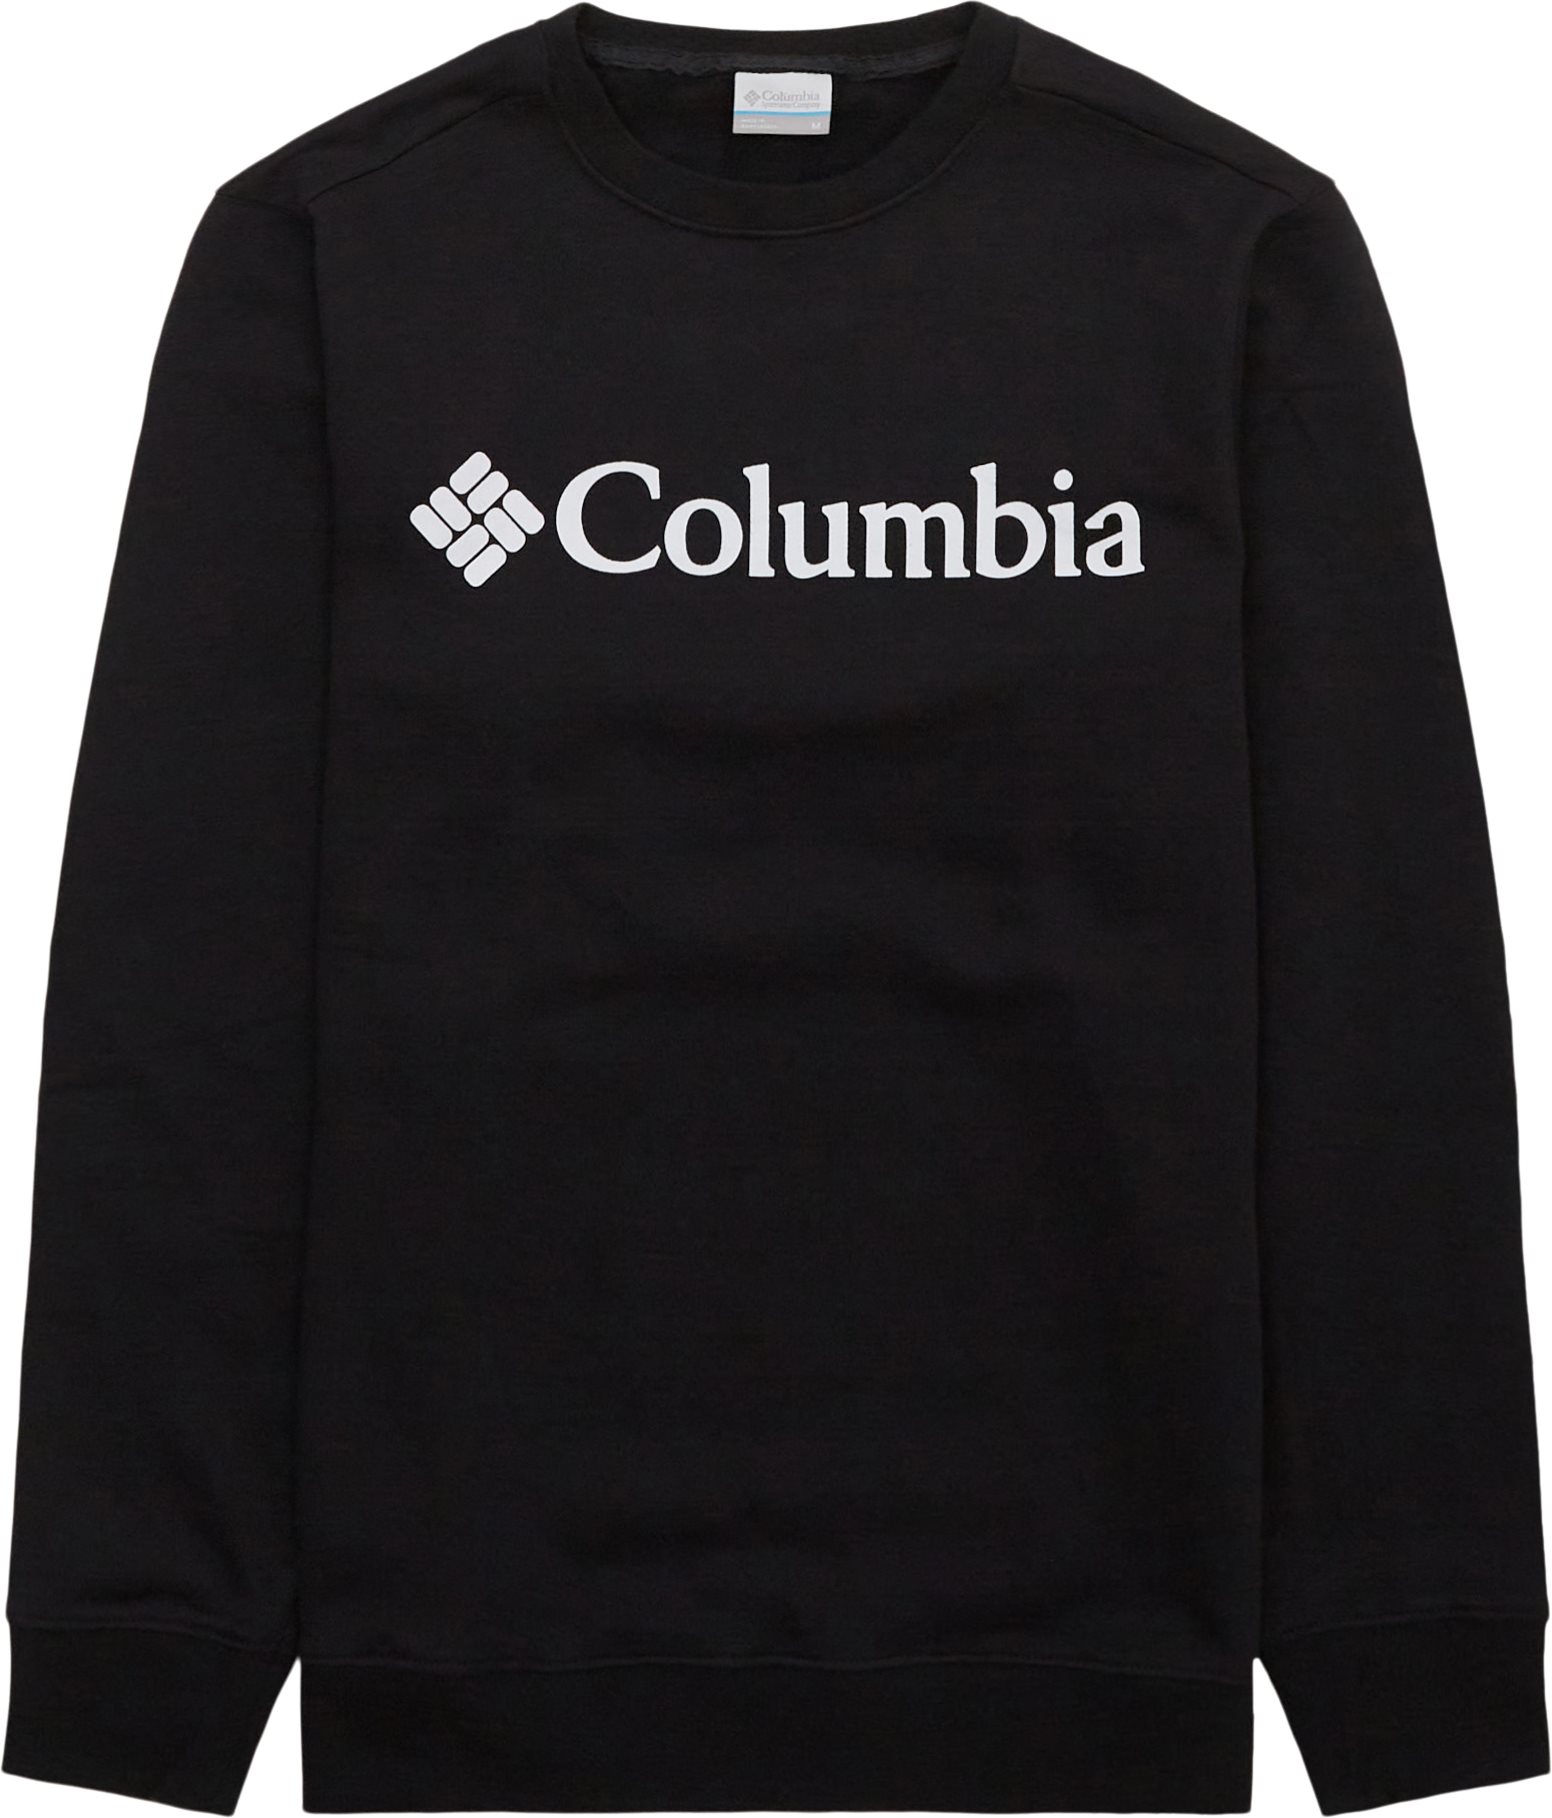 Columbia Sweatshirts COLUMBIA TREK CREW 1957933. Sort